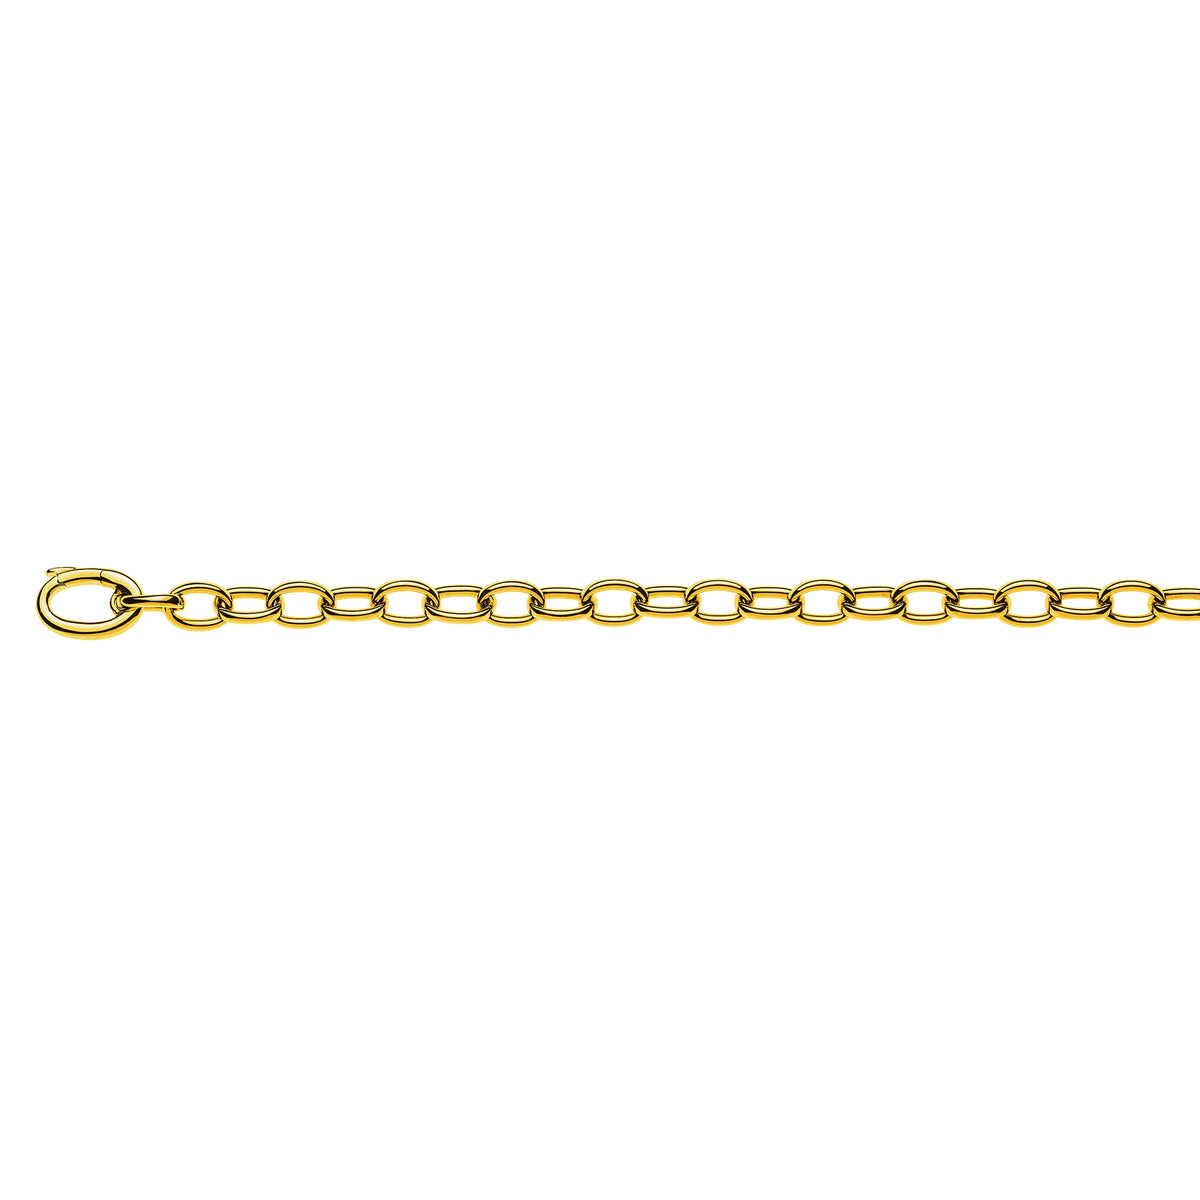 Armbänd Gelbgold 750  Bracelet Anker Oval Handarbeit, ca. 6.0 mm, 20 cm